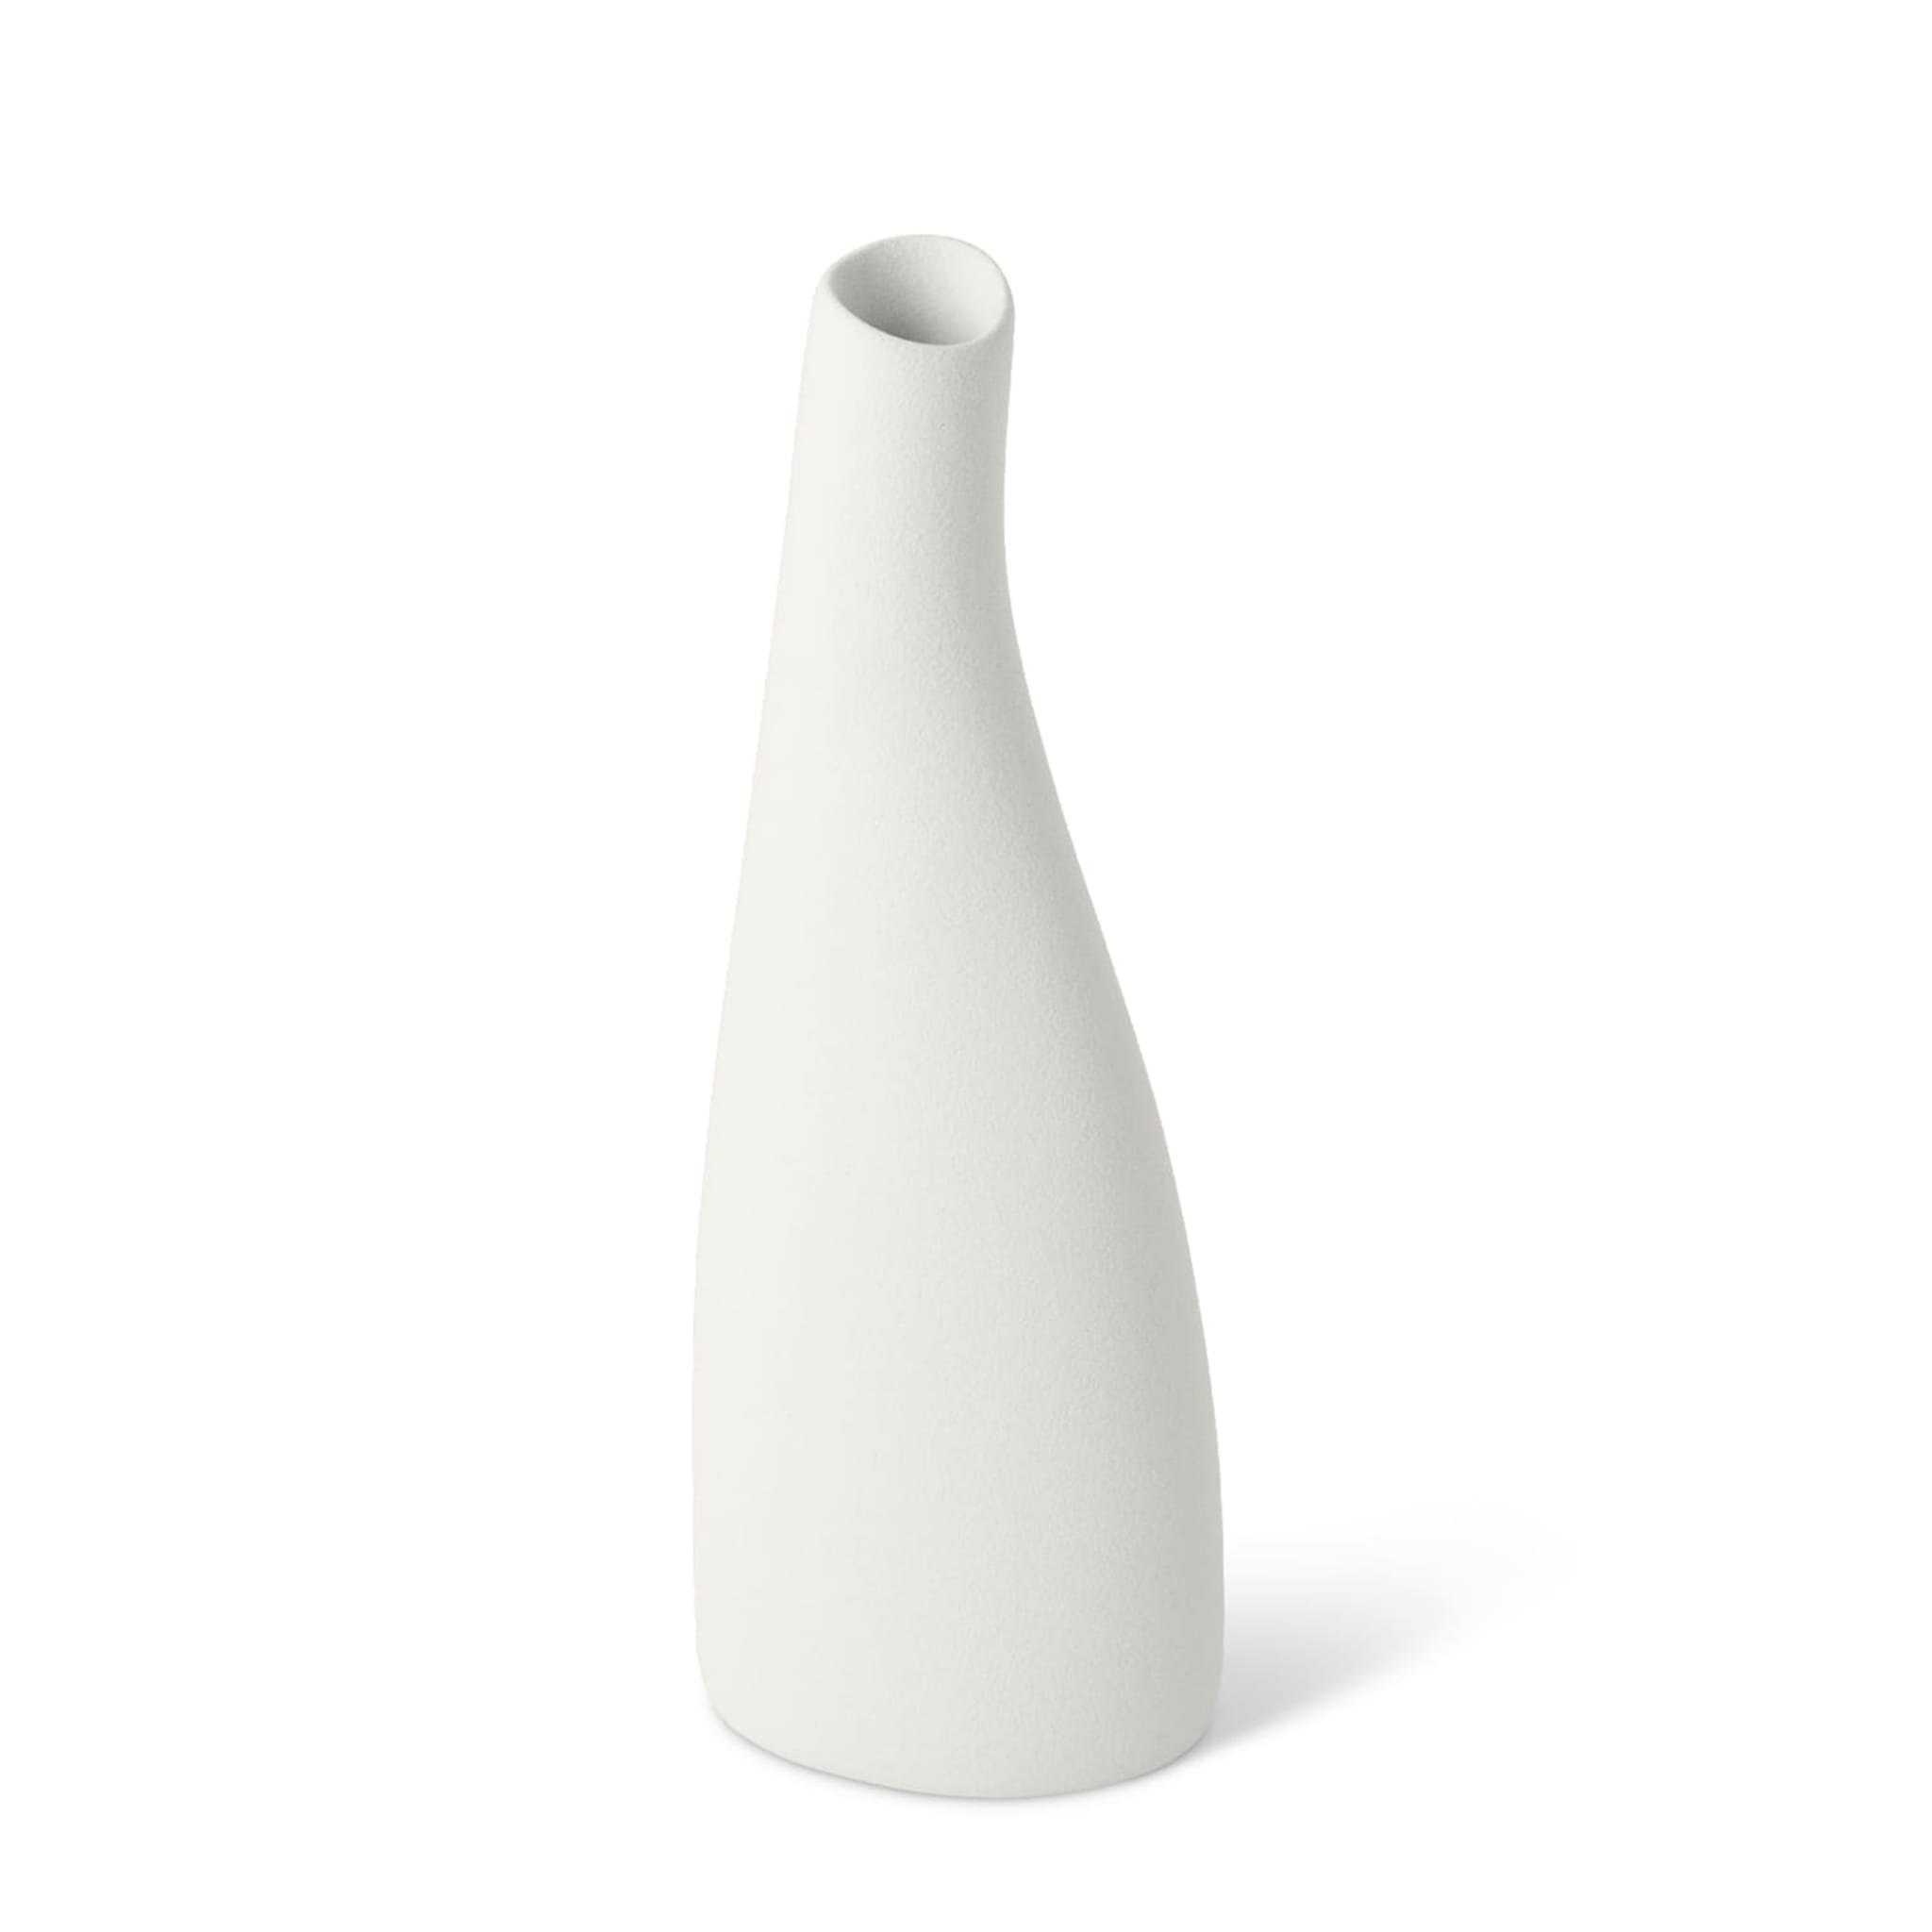 white Bottle vase #1 - Alternative view 1